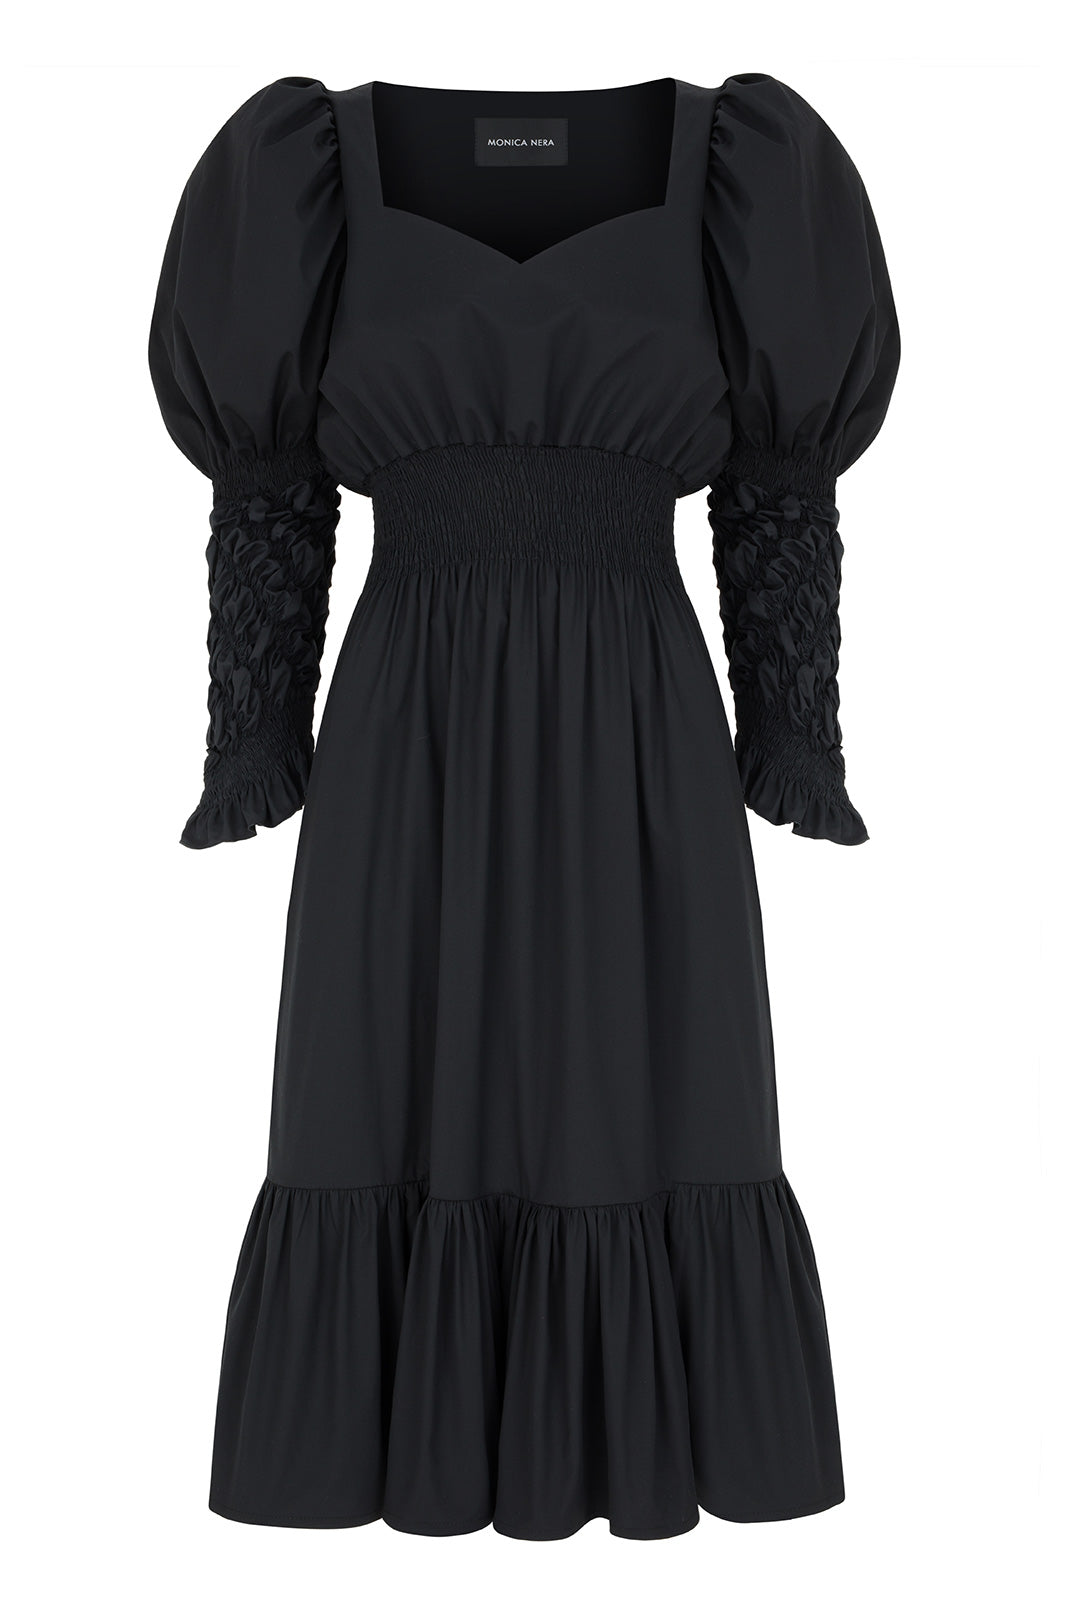 Women’s Blair Dress - Black Extra Small Monica Nera